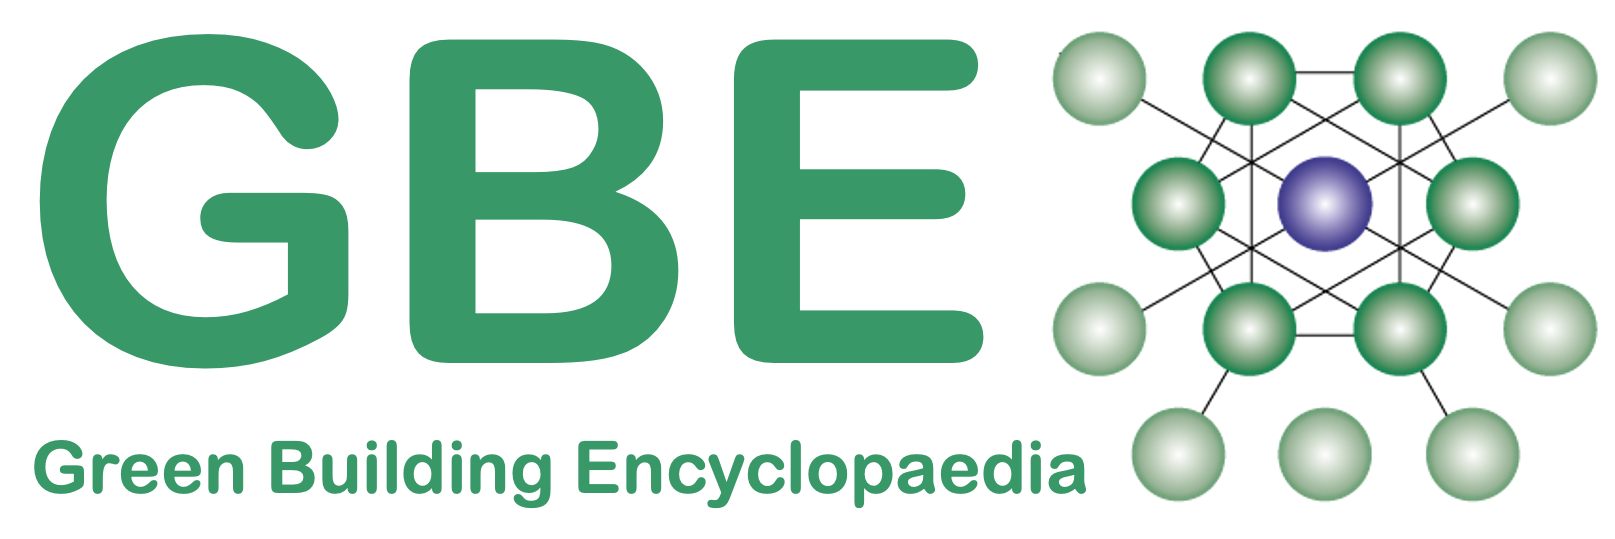 Green Building Encyclopaedia GBE Hexagonal logo large